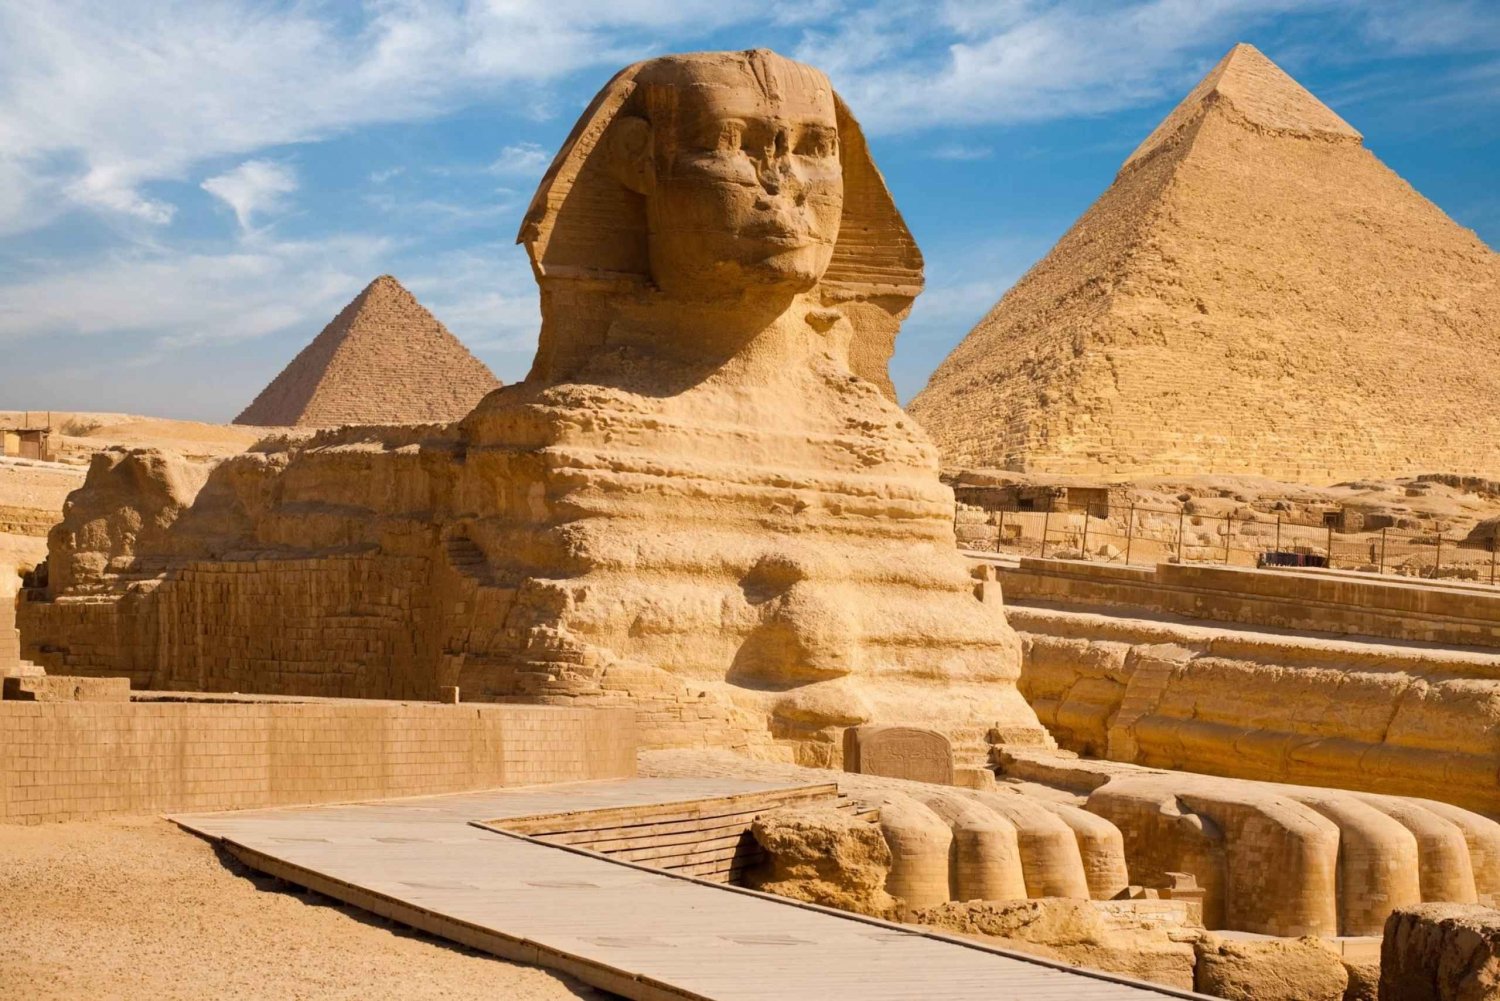 Yksityinen kuljetus: Hurghada: Pyramidit, Sphinx, museo